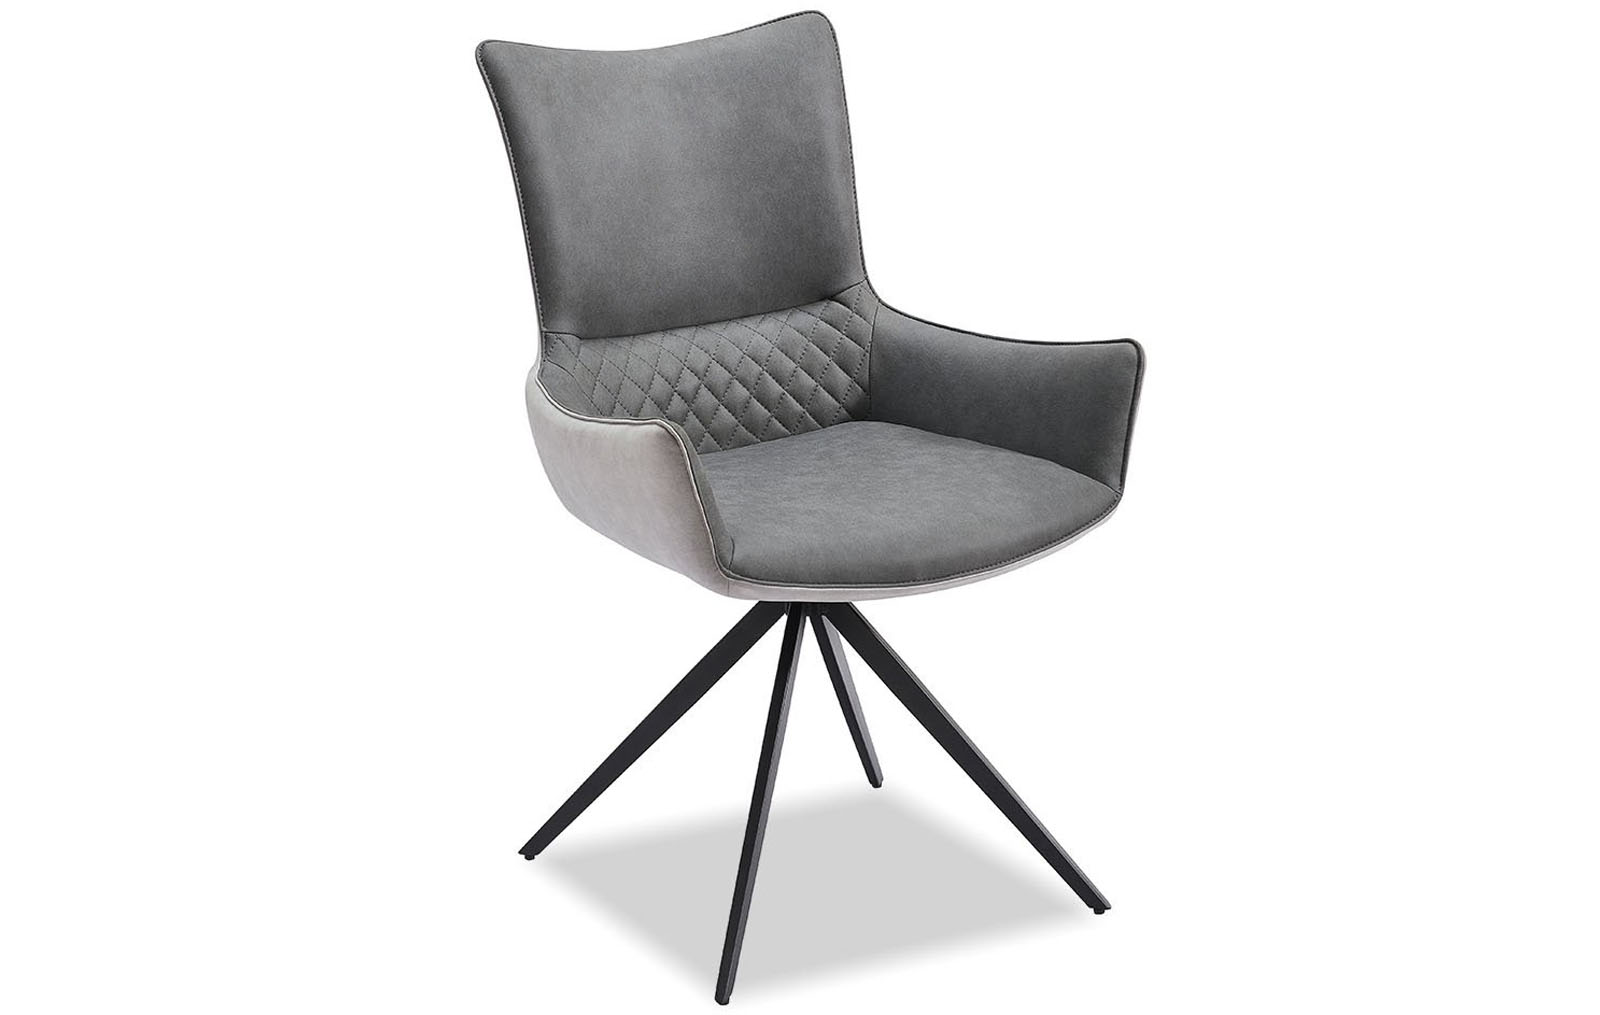 Кресло Jess, графит/серый цвет от Imodern